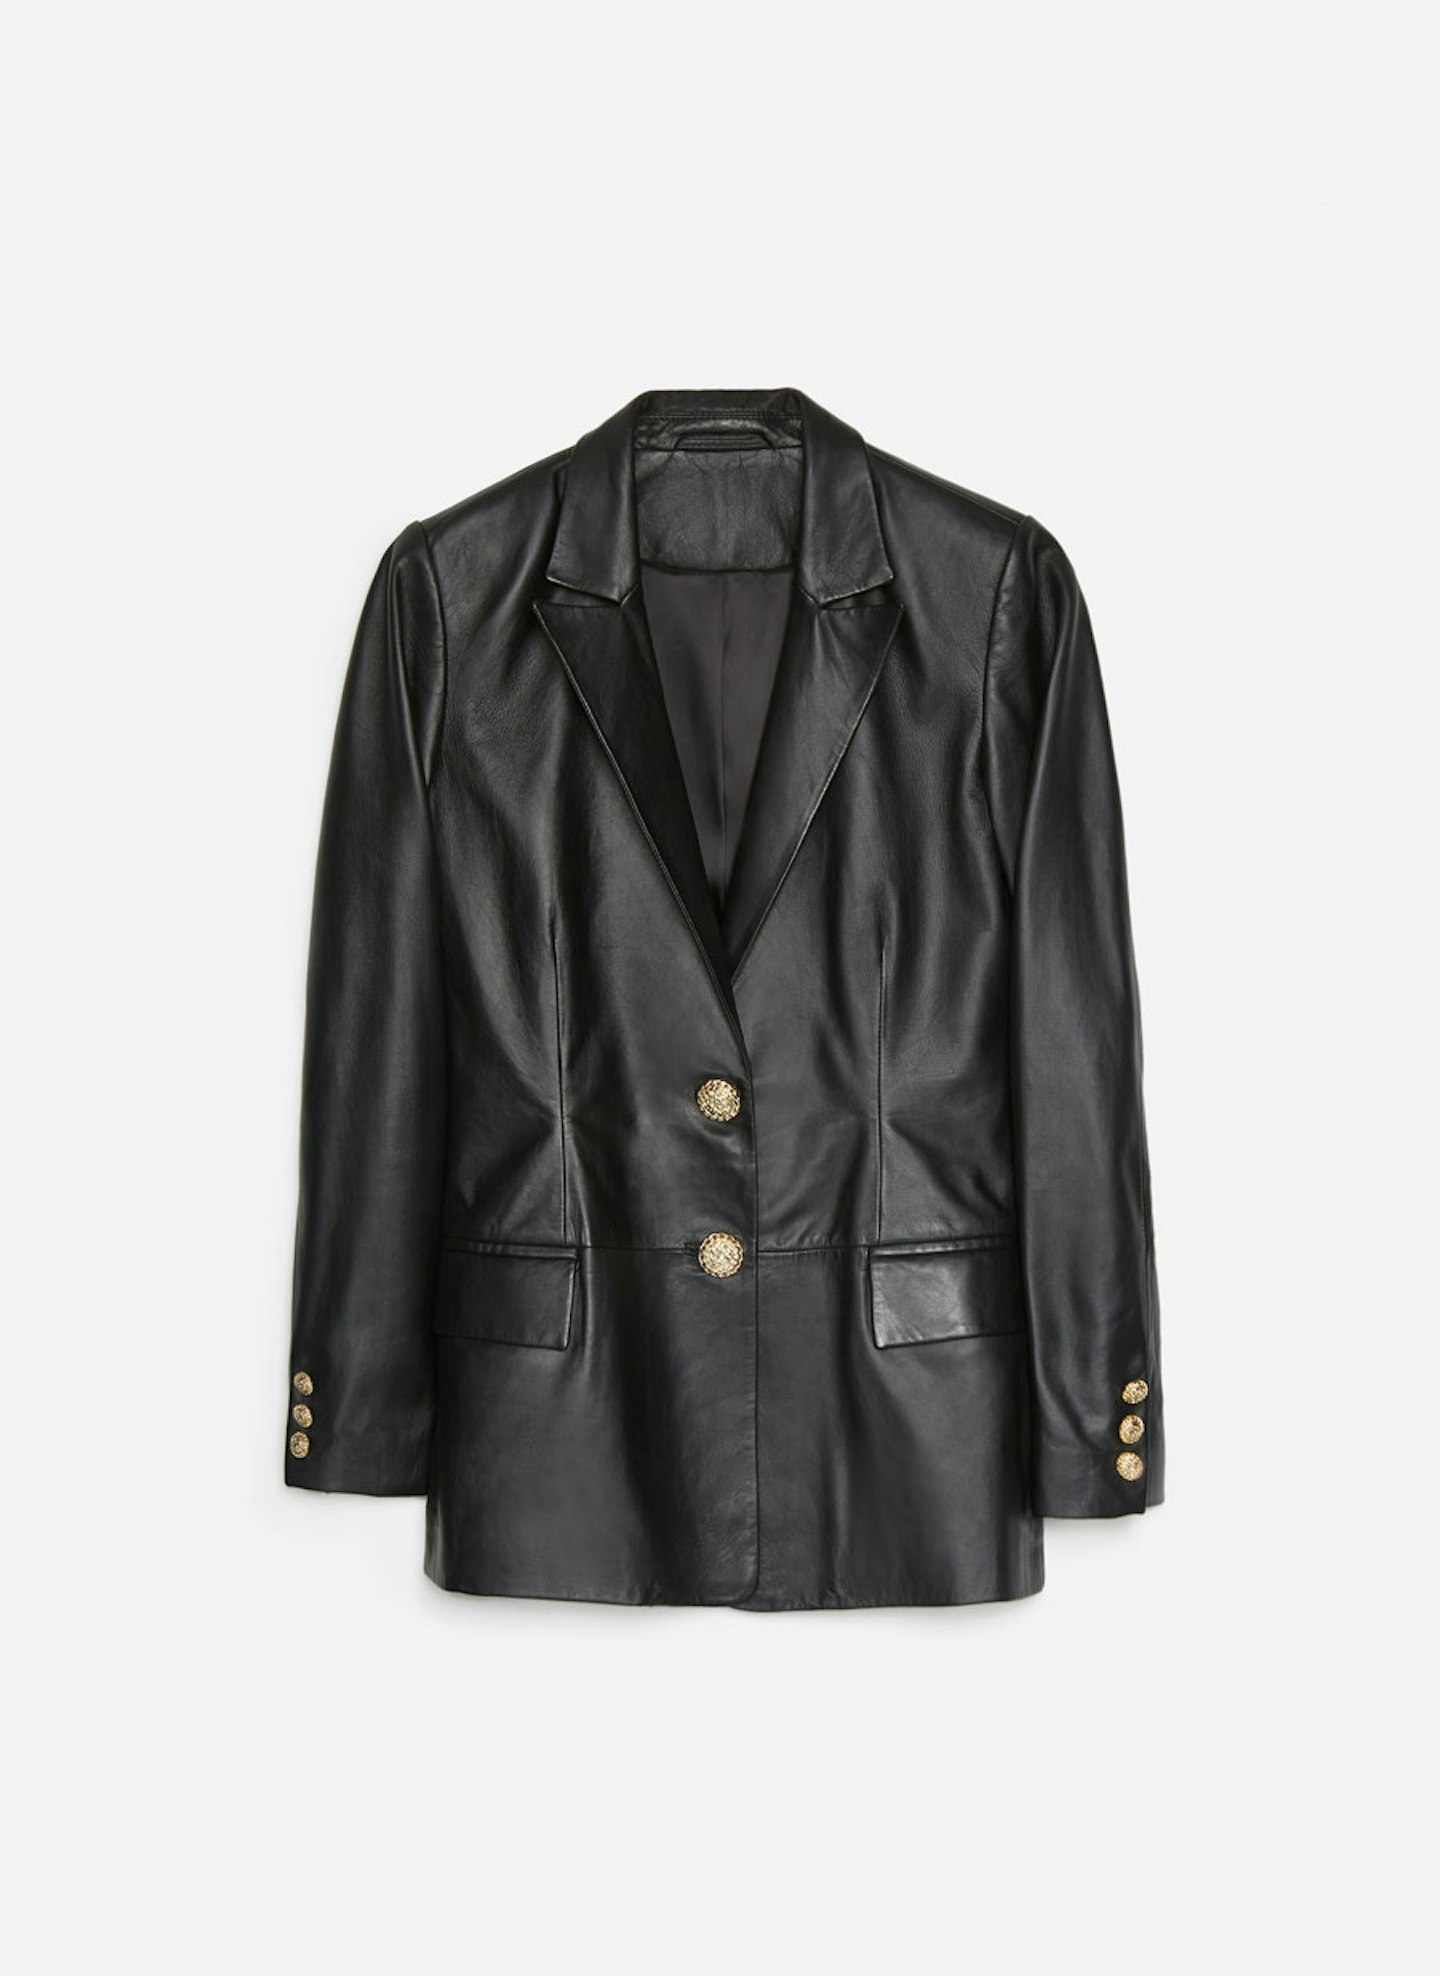 Uterque, Tailored Leather Blazer, £220